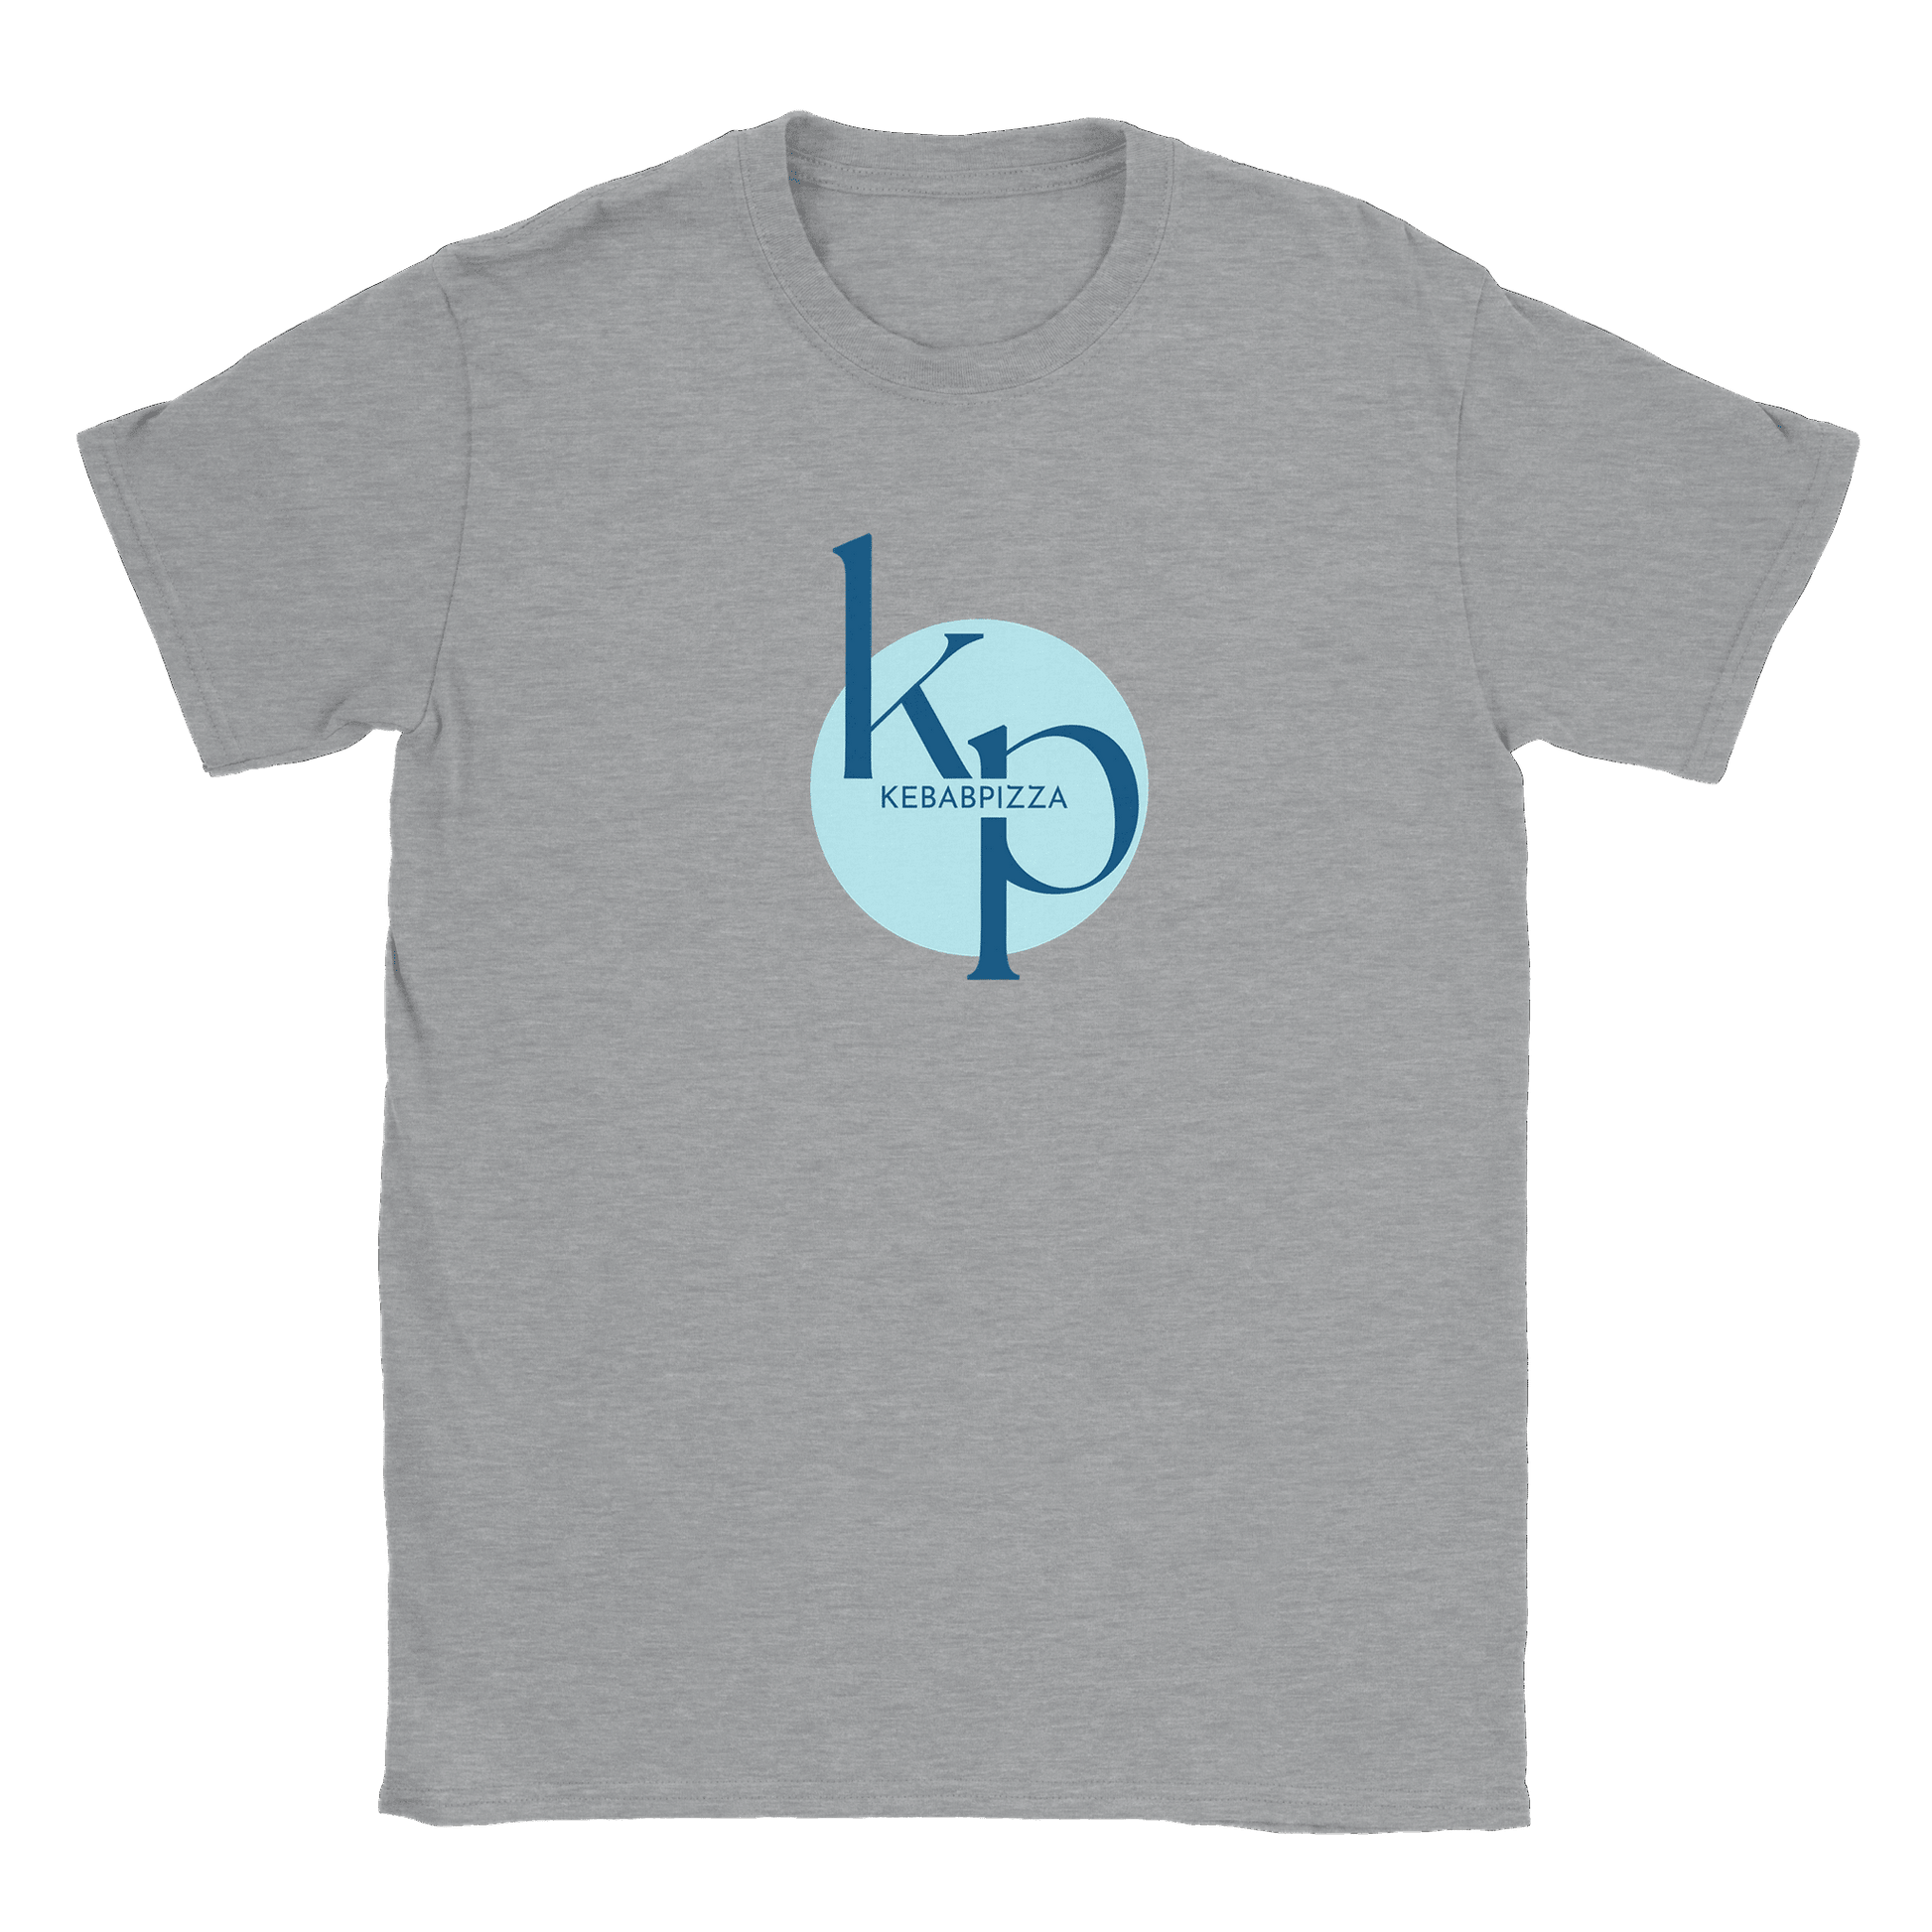 Kebabpizza - T-shirt Sports Grey